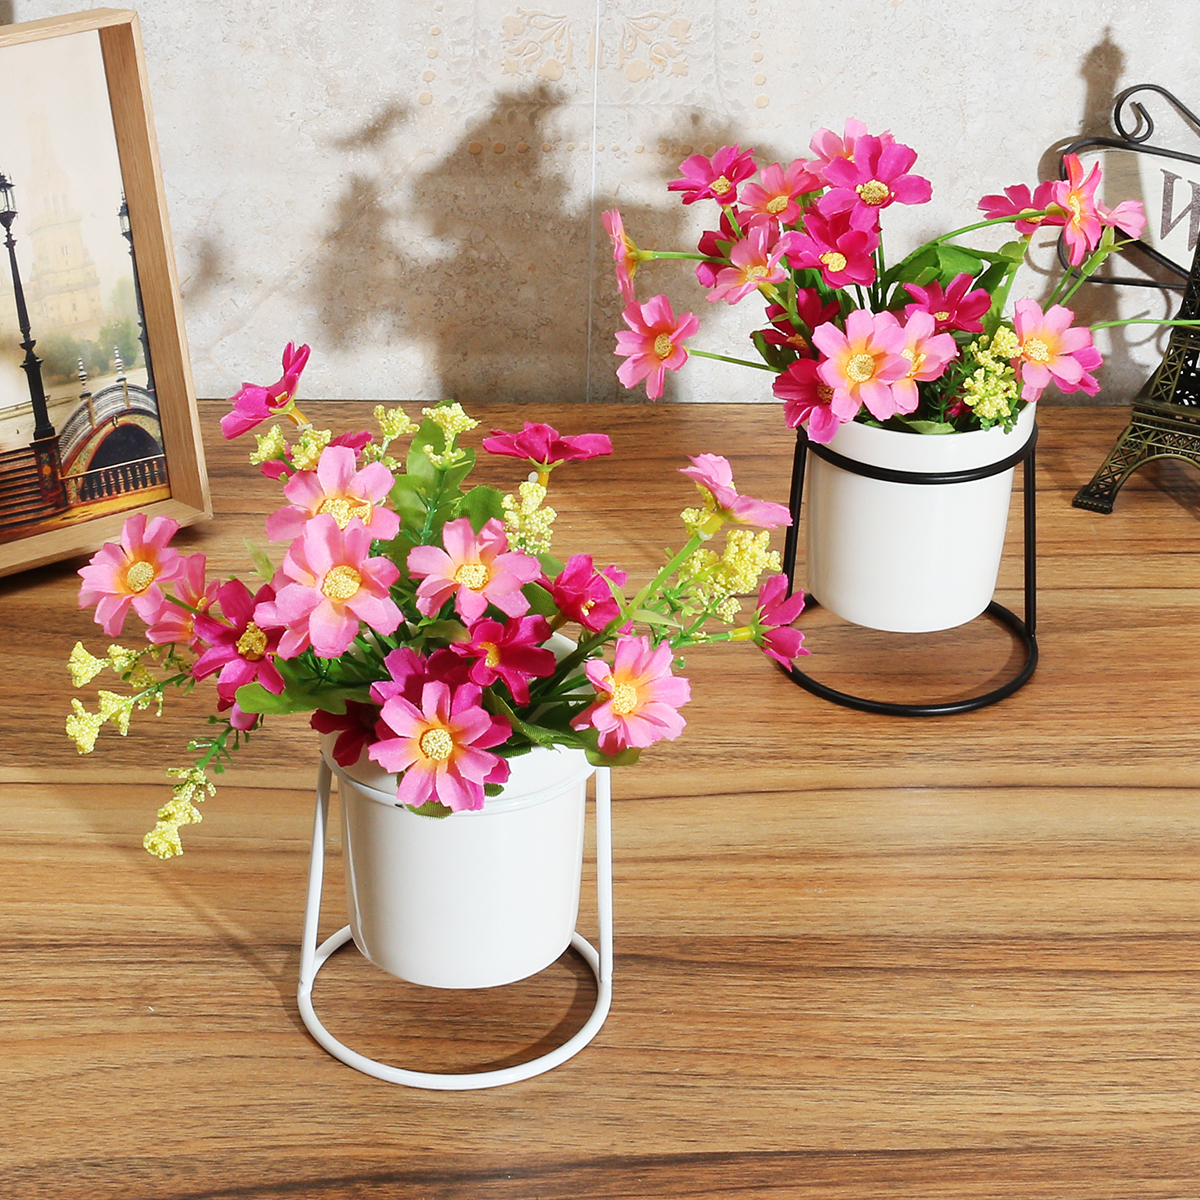 Home-Gardening-Ceramic-Flower-Pot-Metal-Rack-Garden-Plant-Succulent-Holder-Vase-Decorations-1640147-1